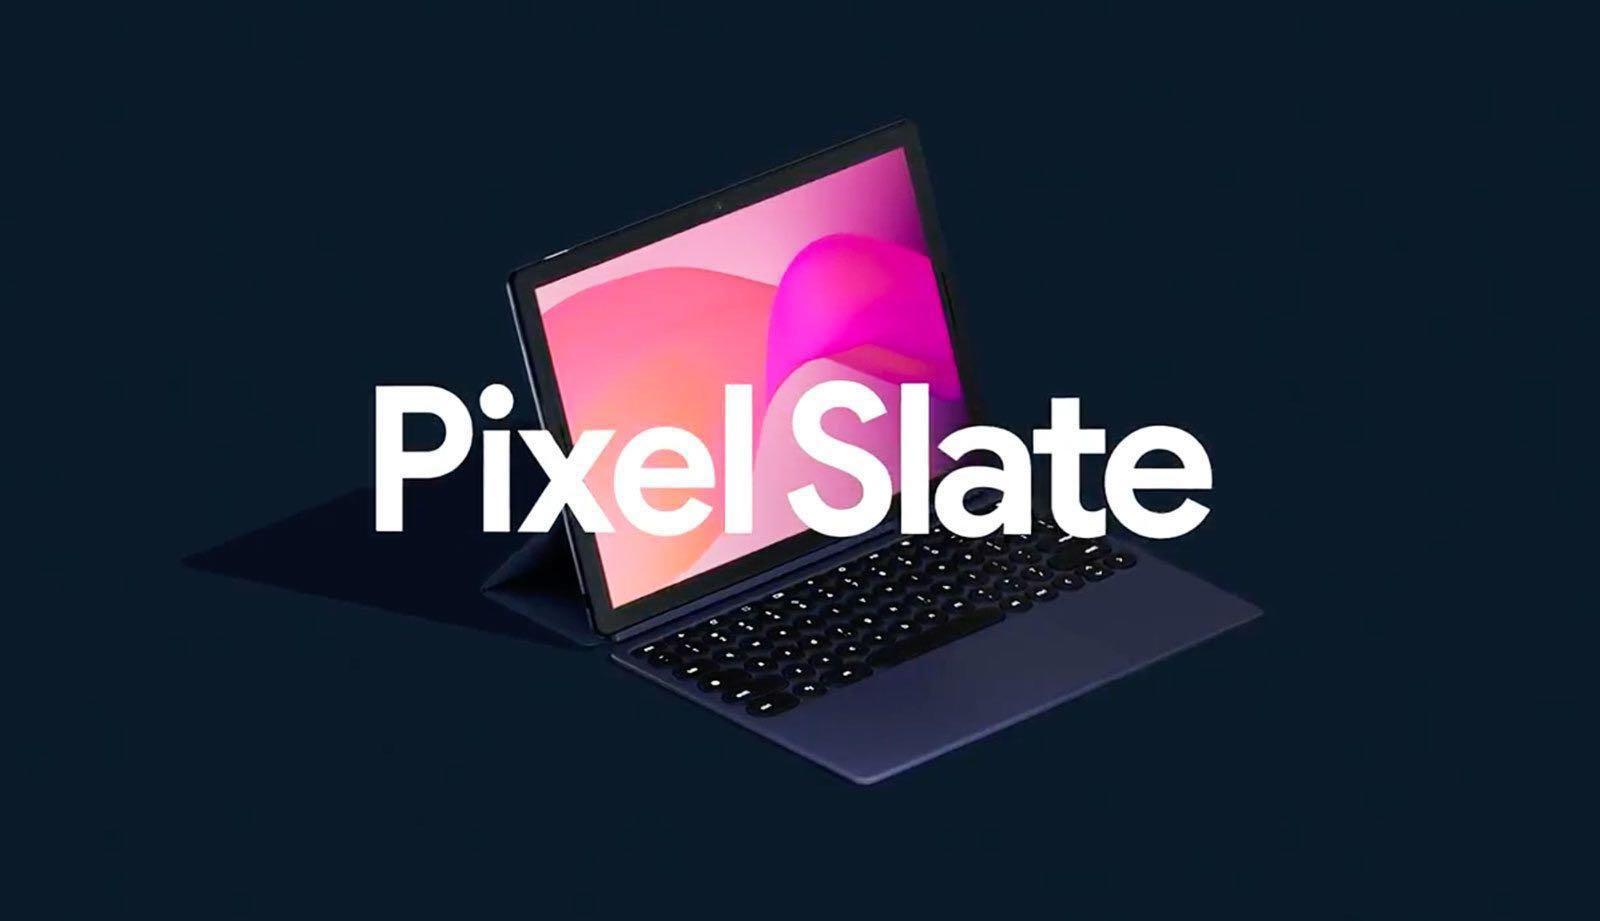 Google Pixel Slate Tablet (8th Gen Intel Core i5 / 128GB / 8GB RAM